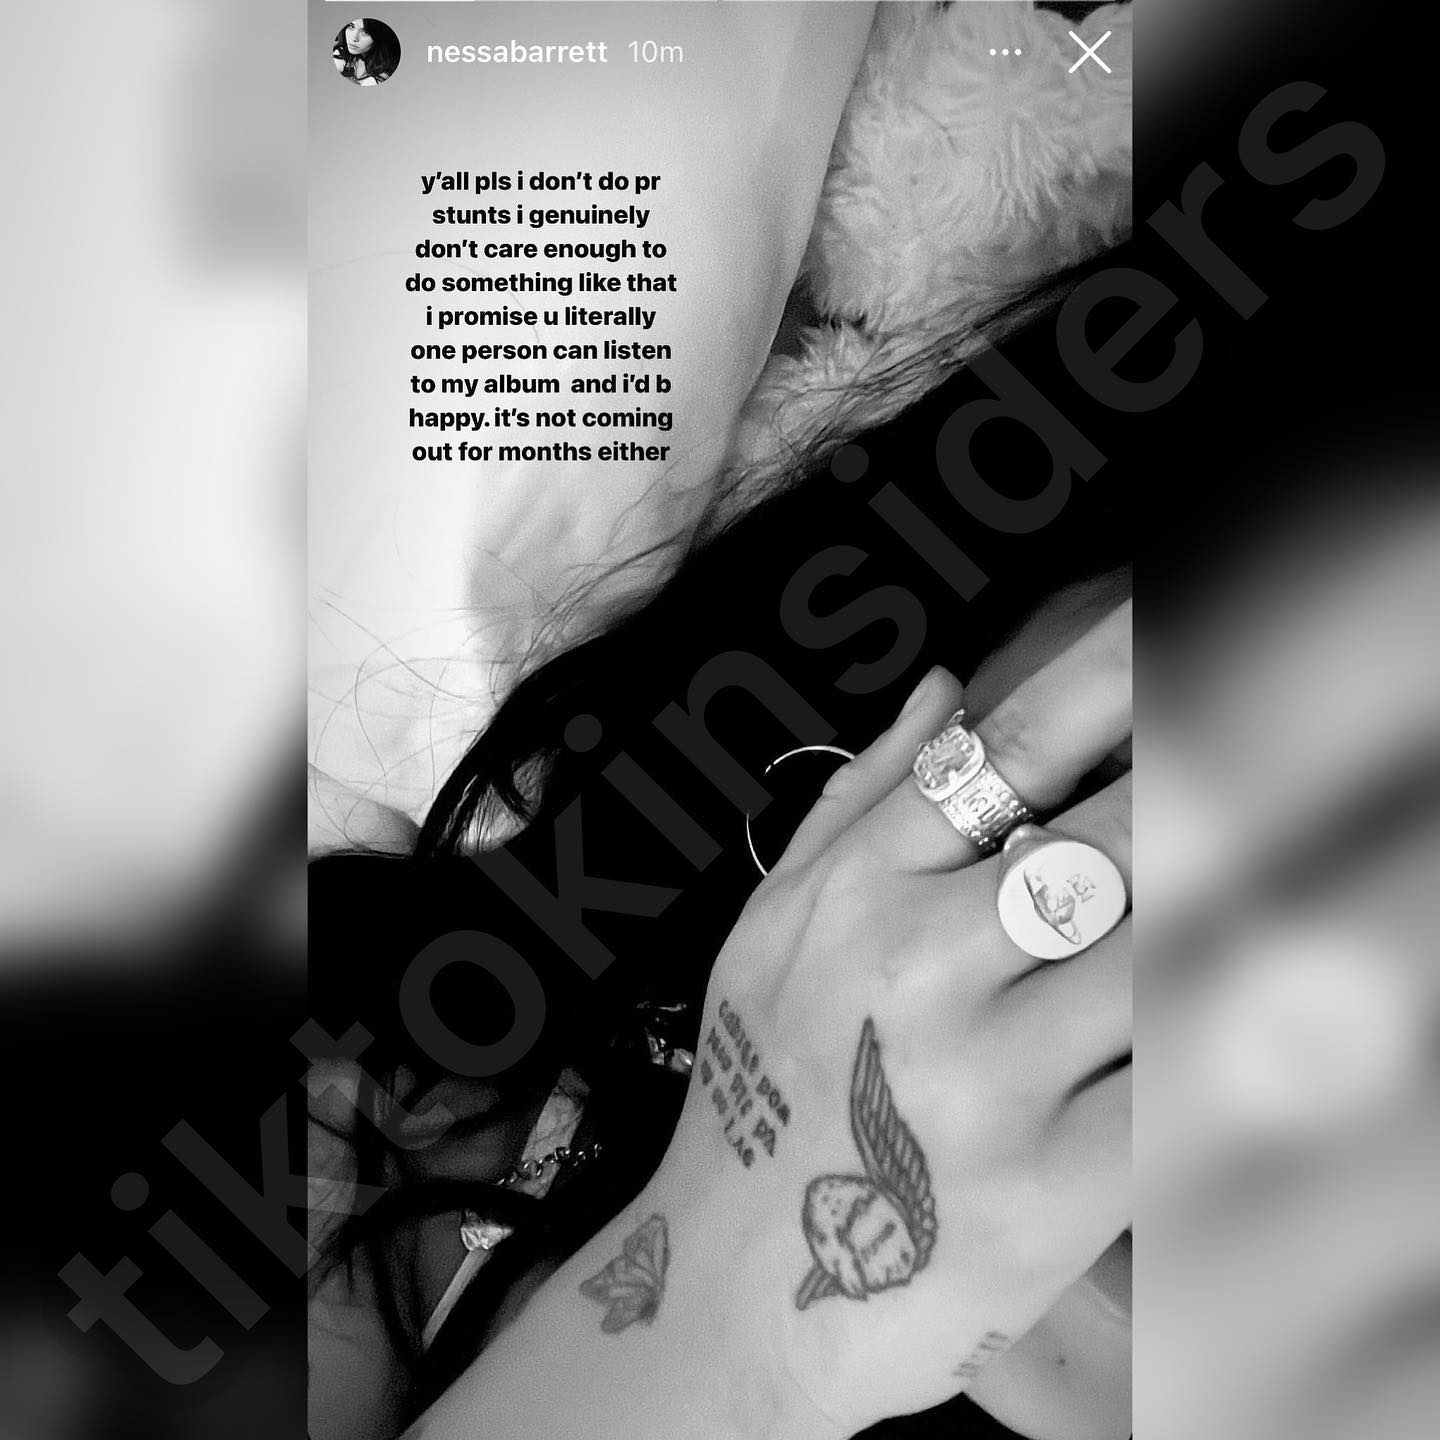 Nessa Barrett's Instagram story mentioned that she didn't unfollow Jaden Hossler for a PR stunt